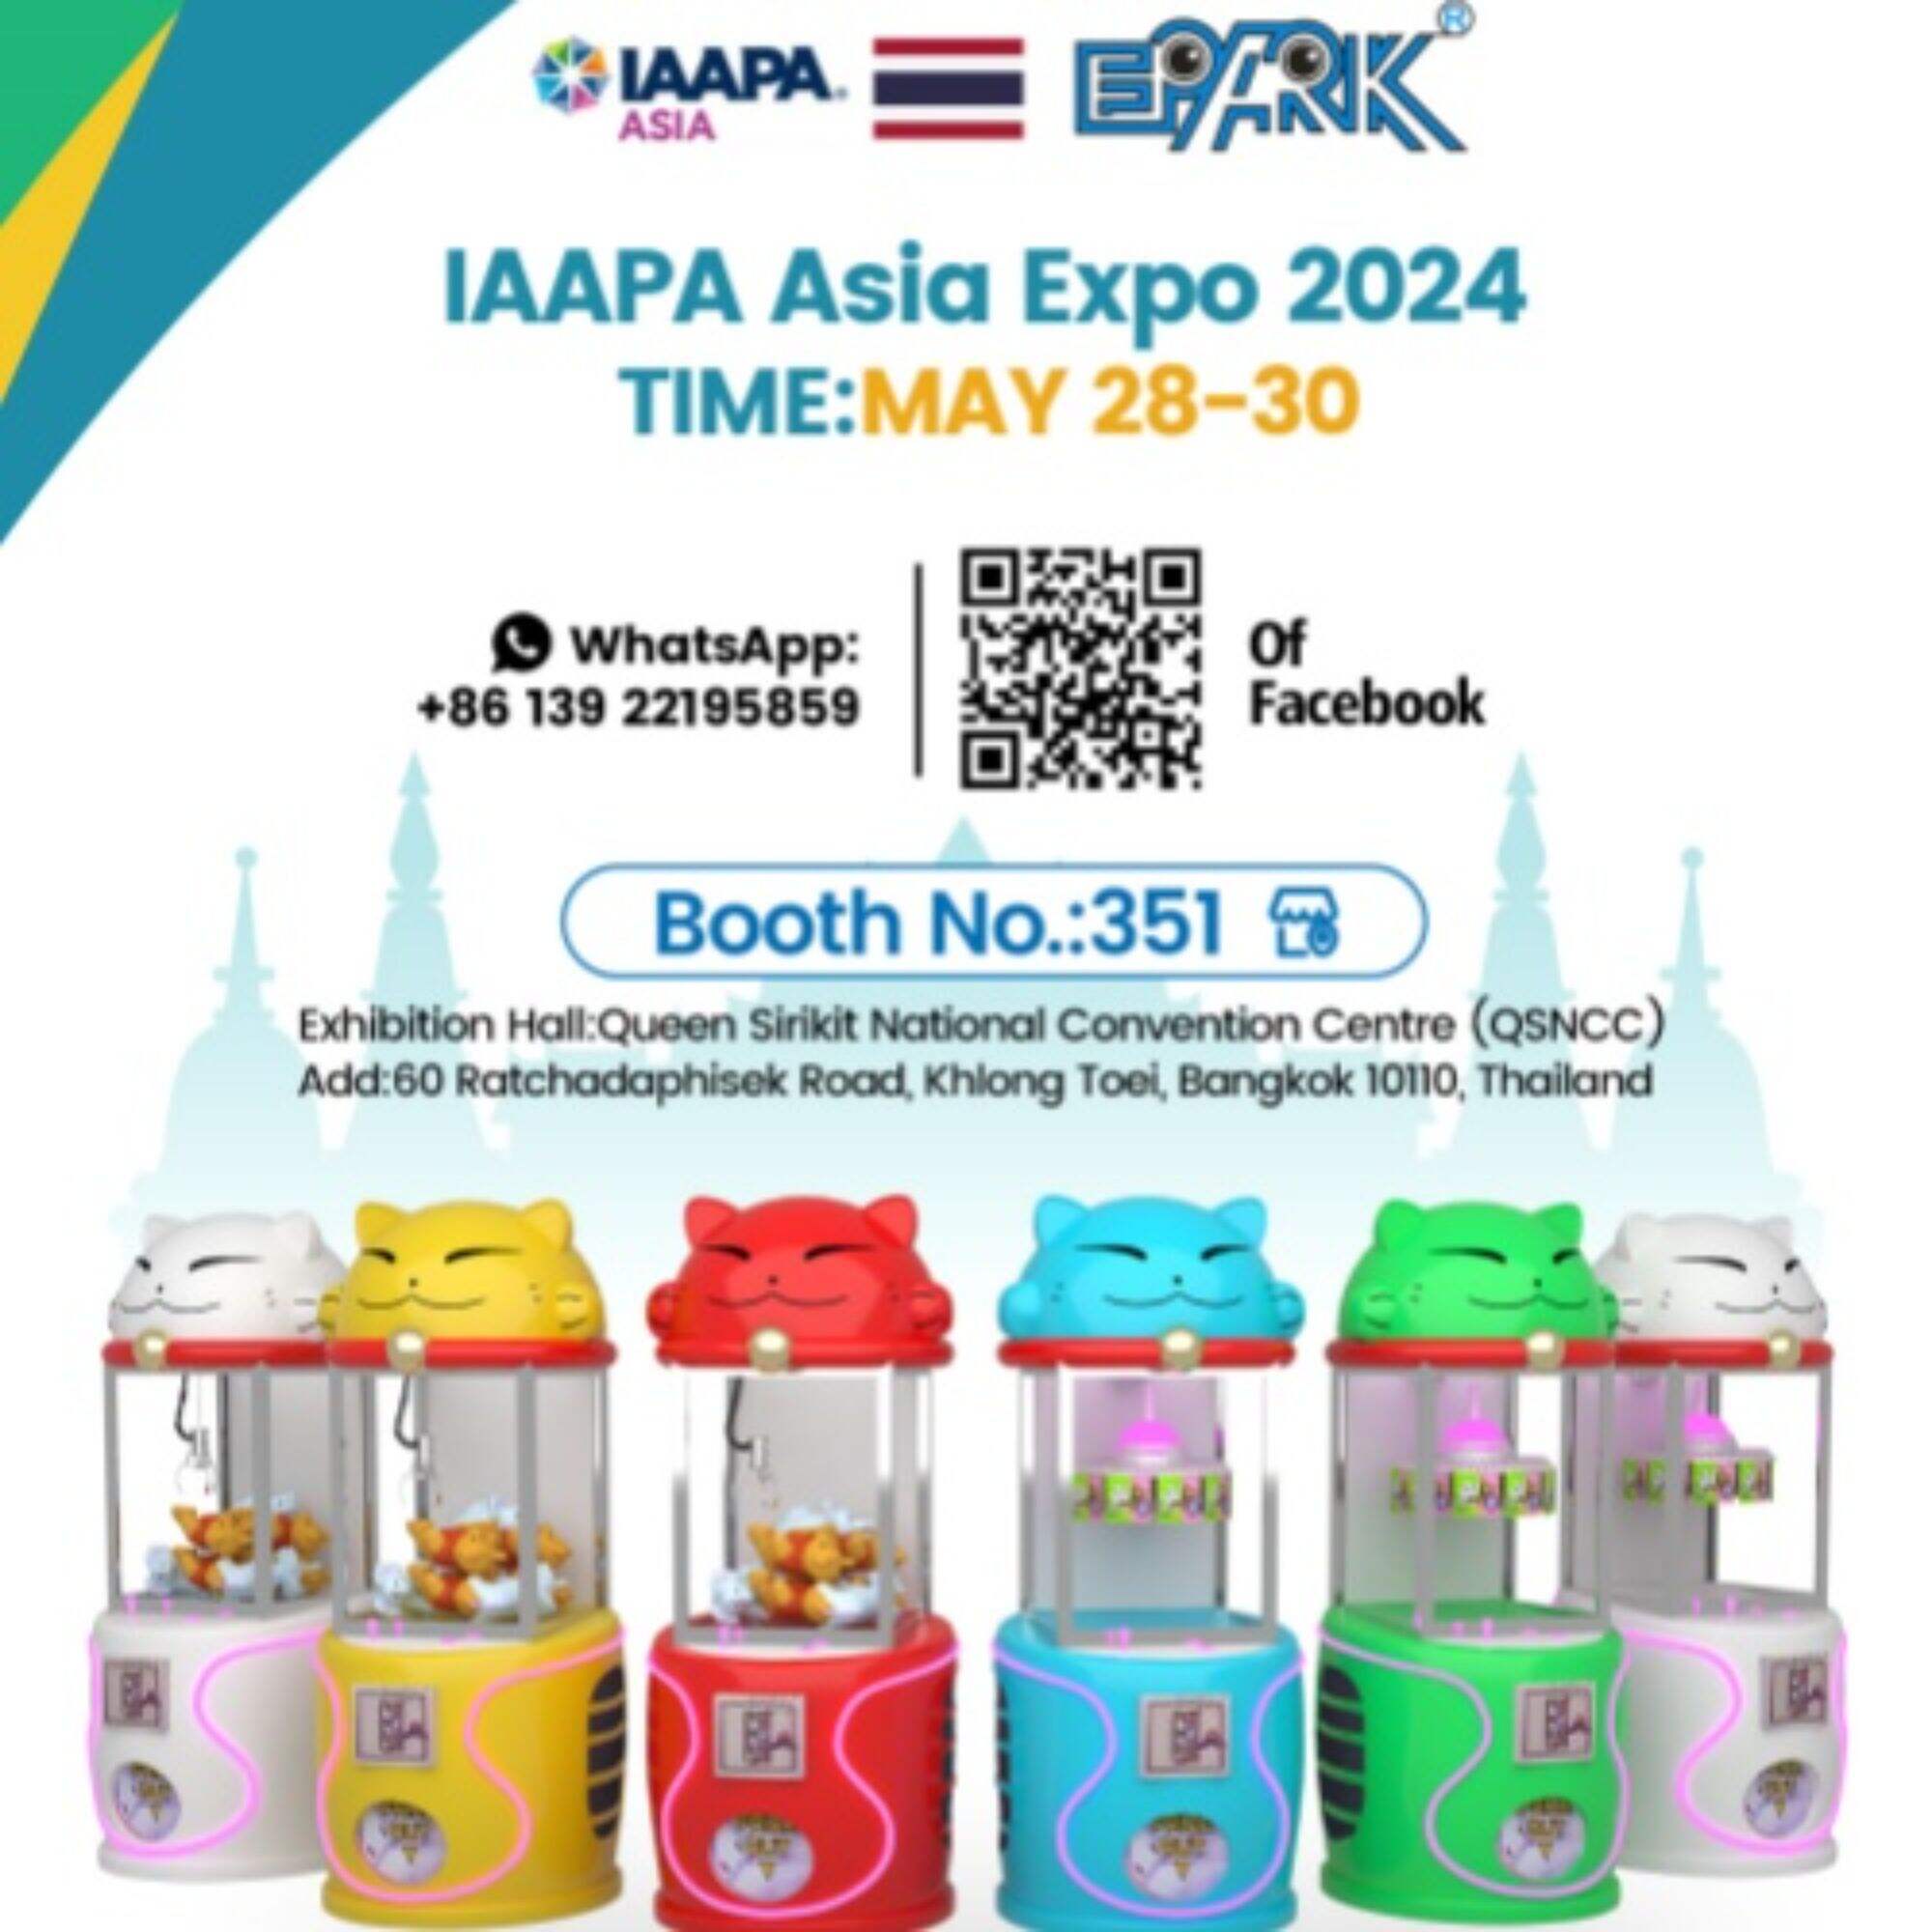 EPARK invites you to IAAPA EXPO 2024